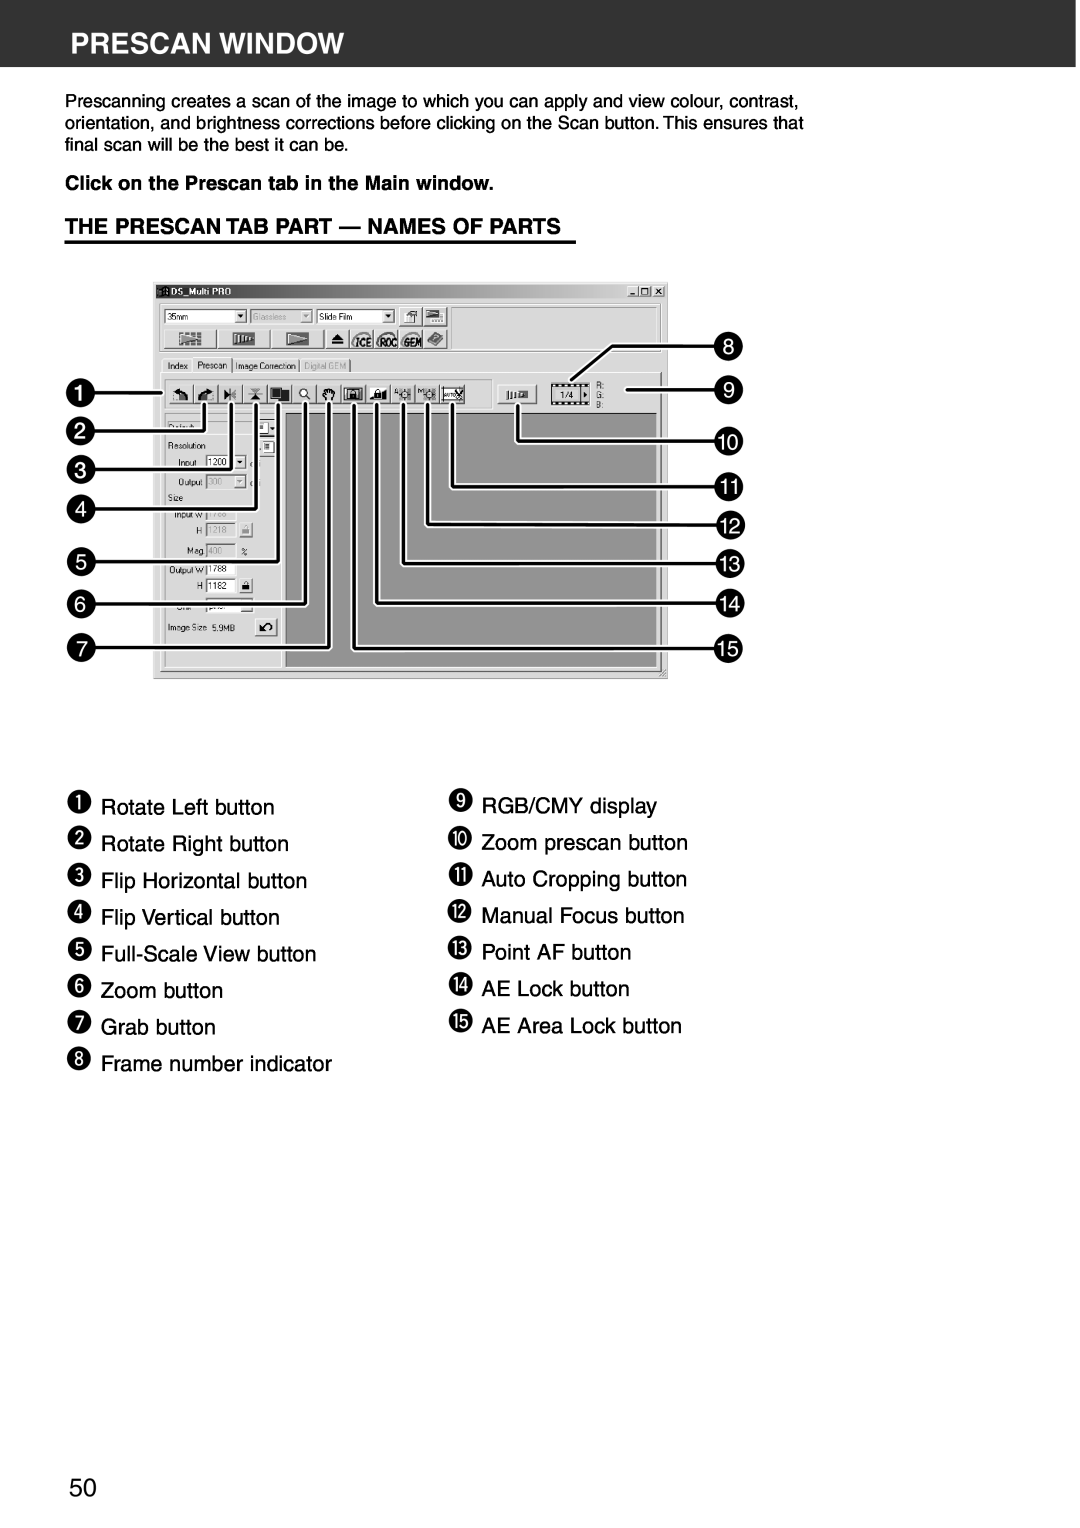 Konica Minolta Scan Multi PRO instruction manual Prescan Window, The Prescan Tab Part - Names Of Parts 